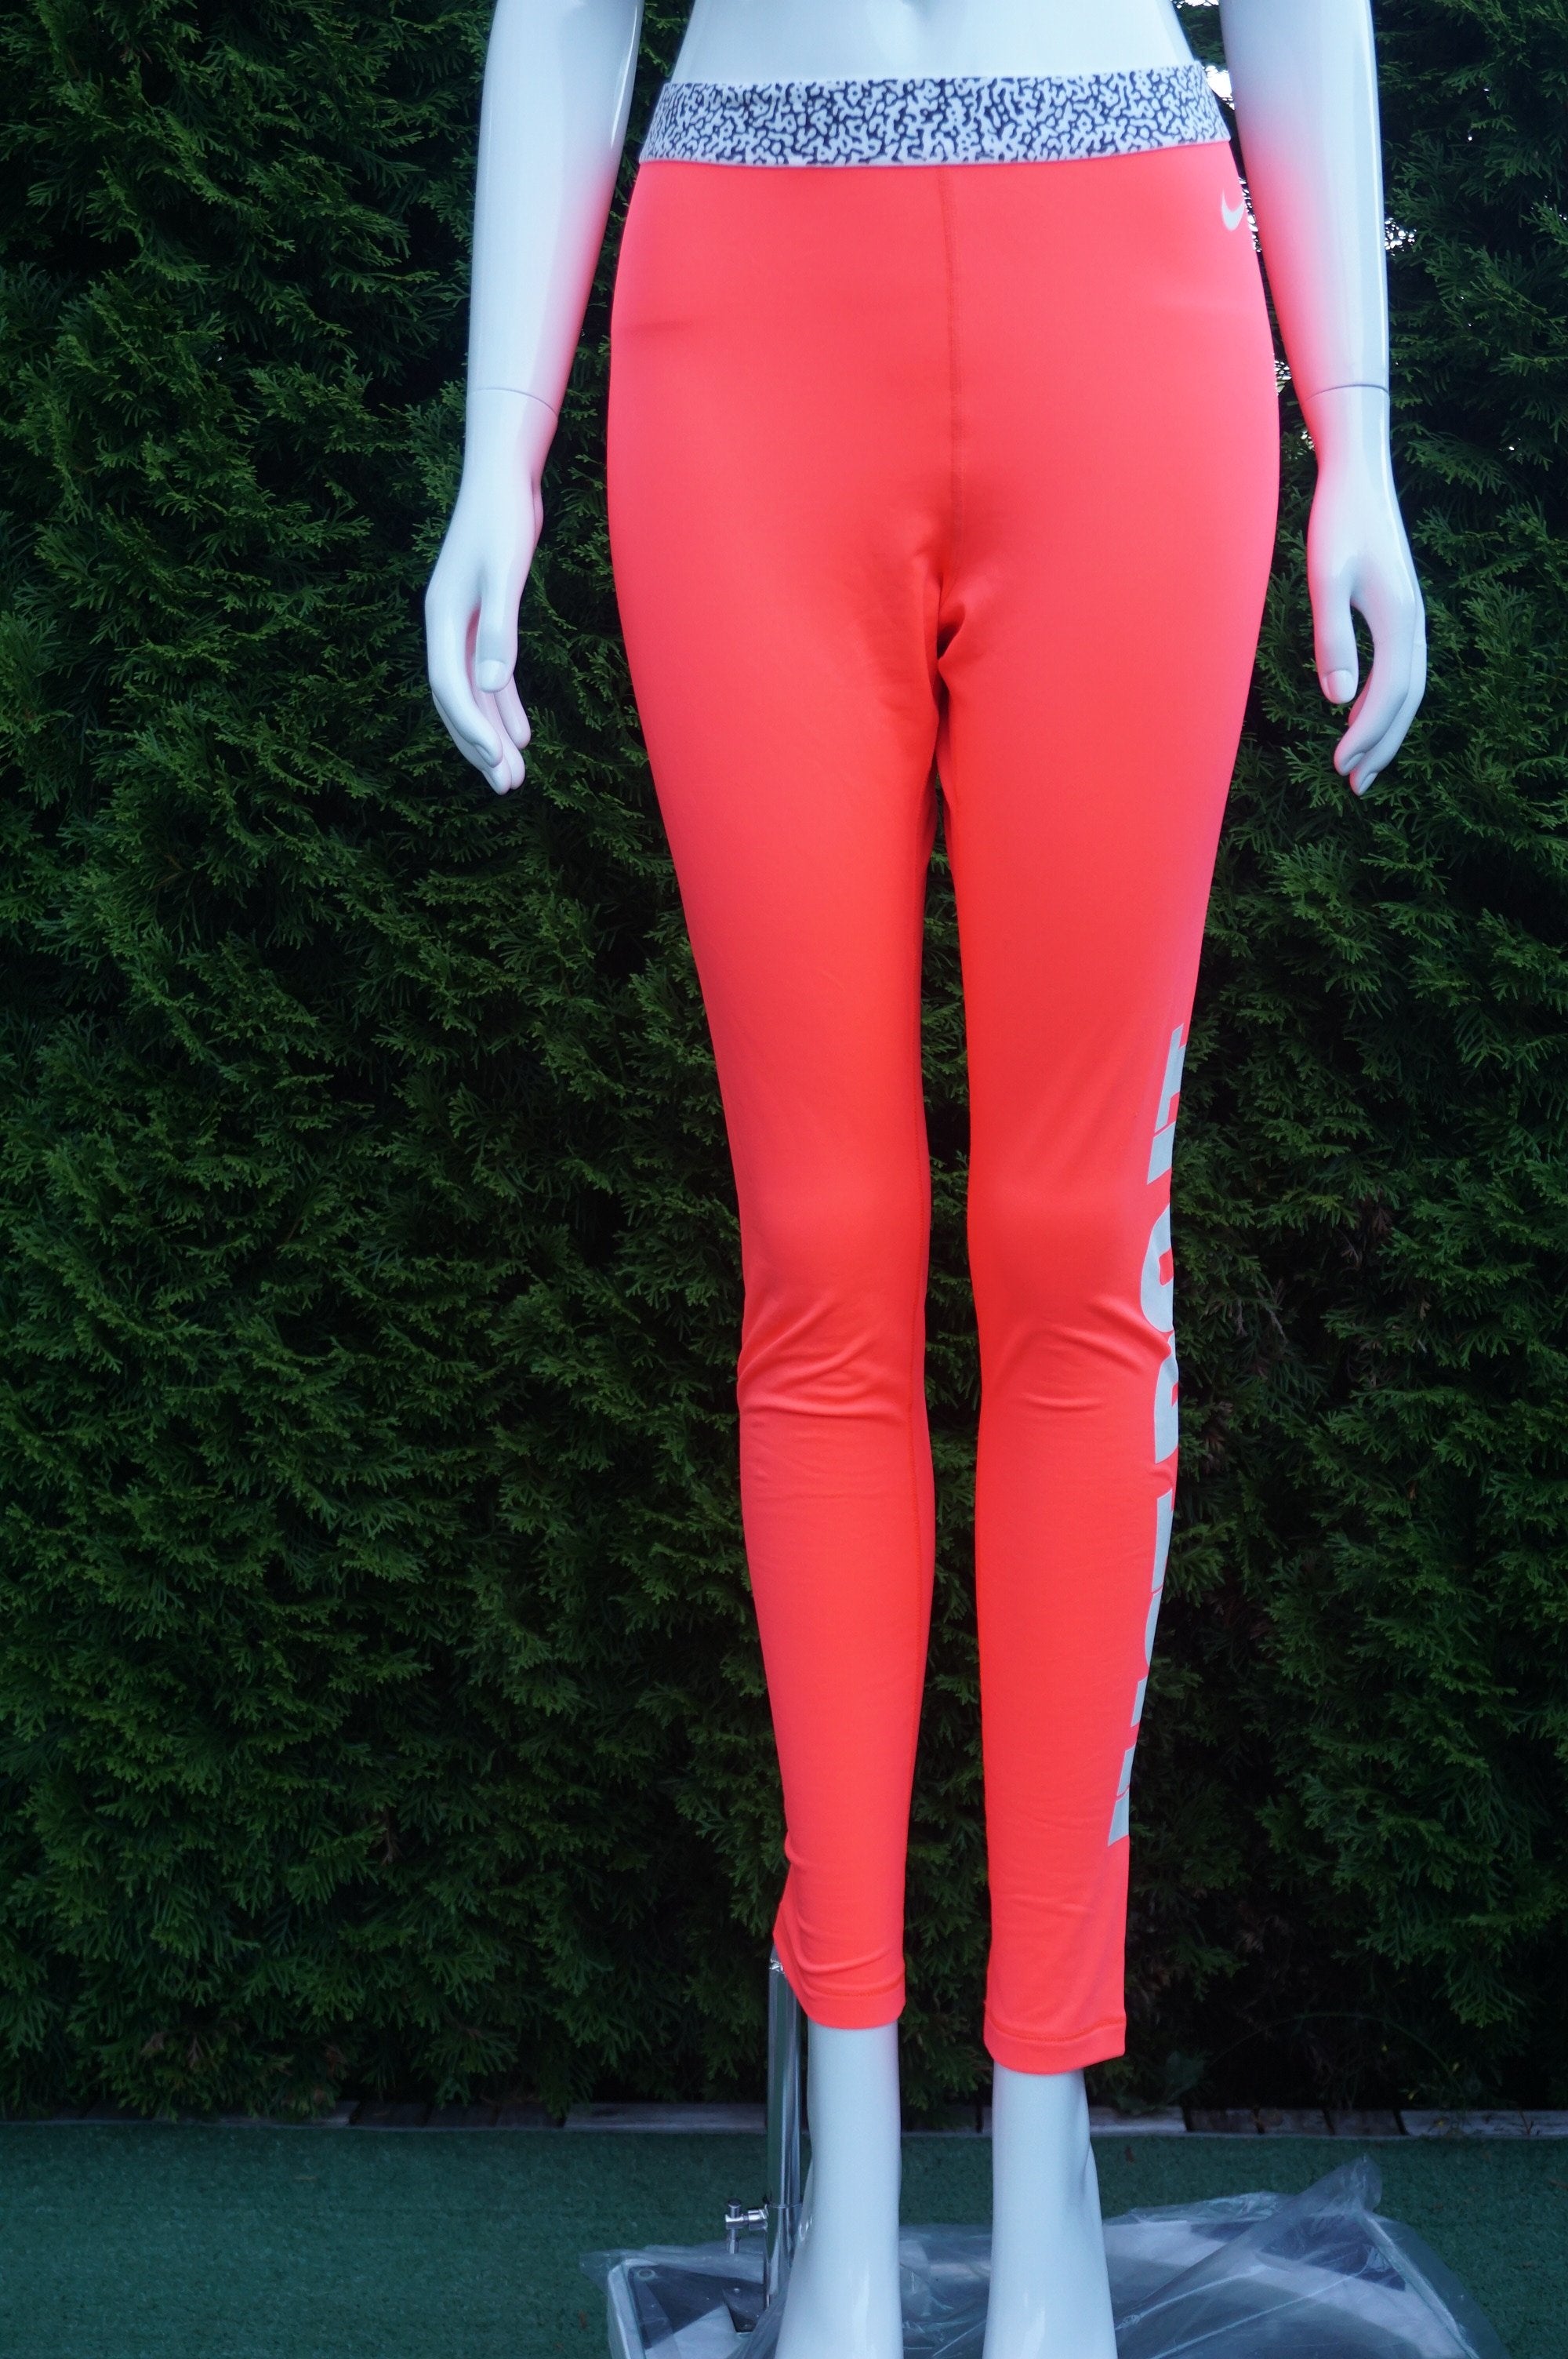 Nike Medium Leg-A-See leggings in Cheetah pink print slim leg